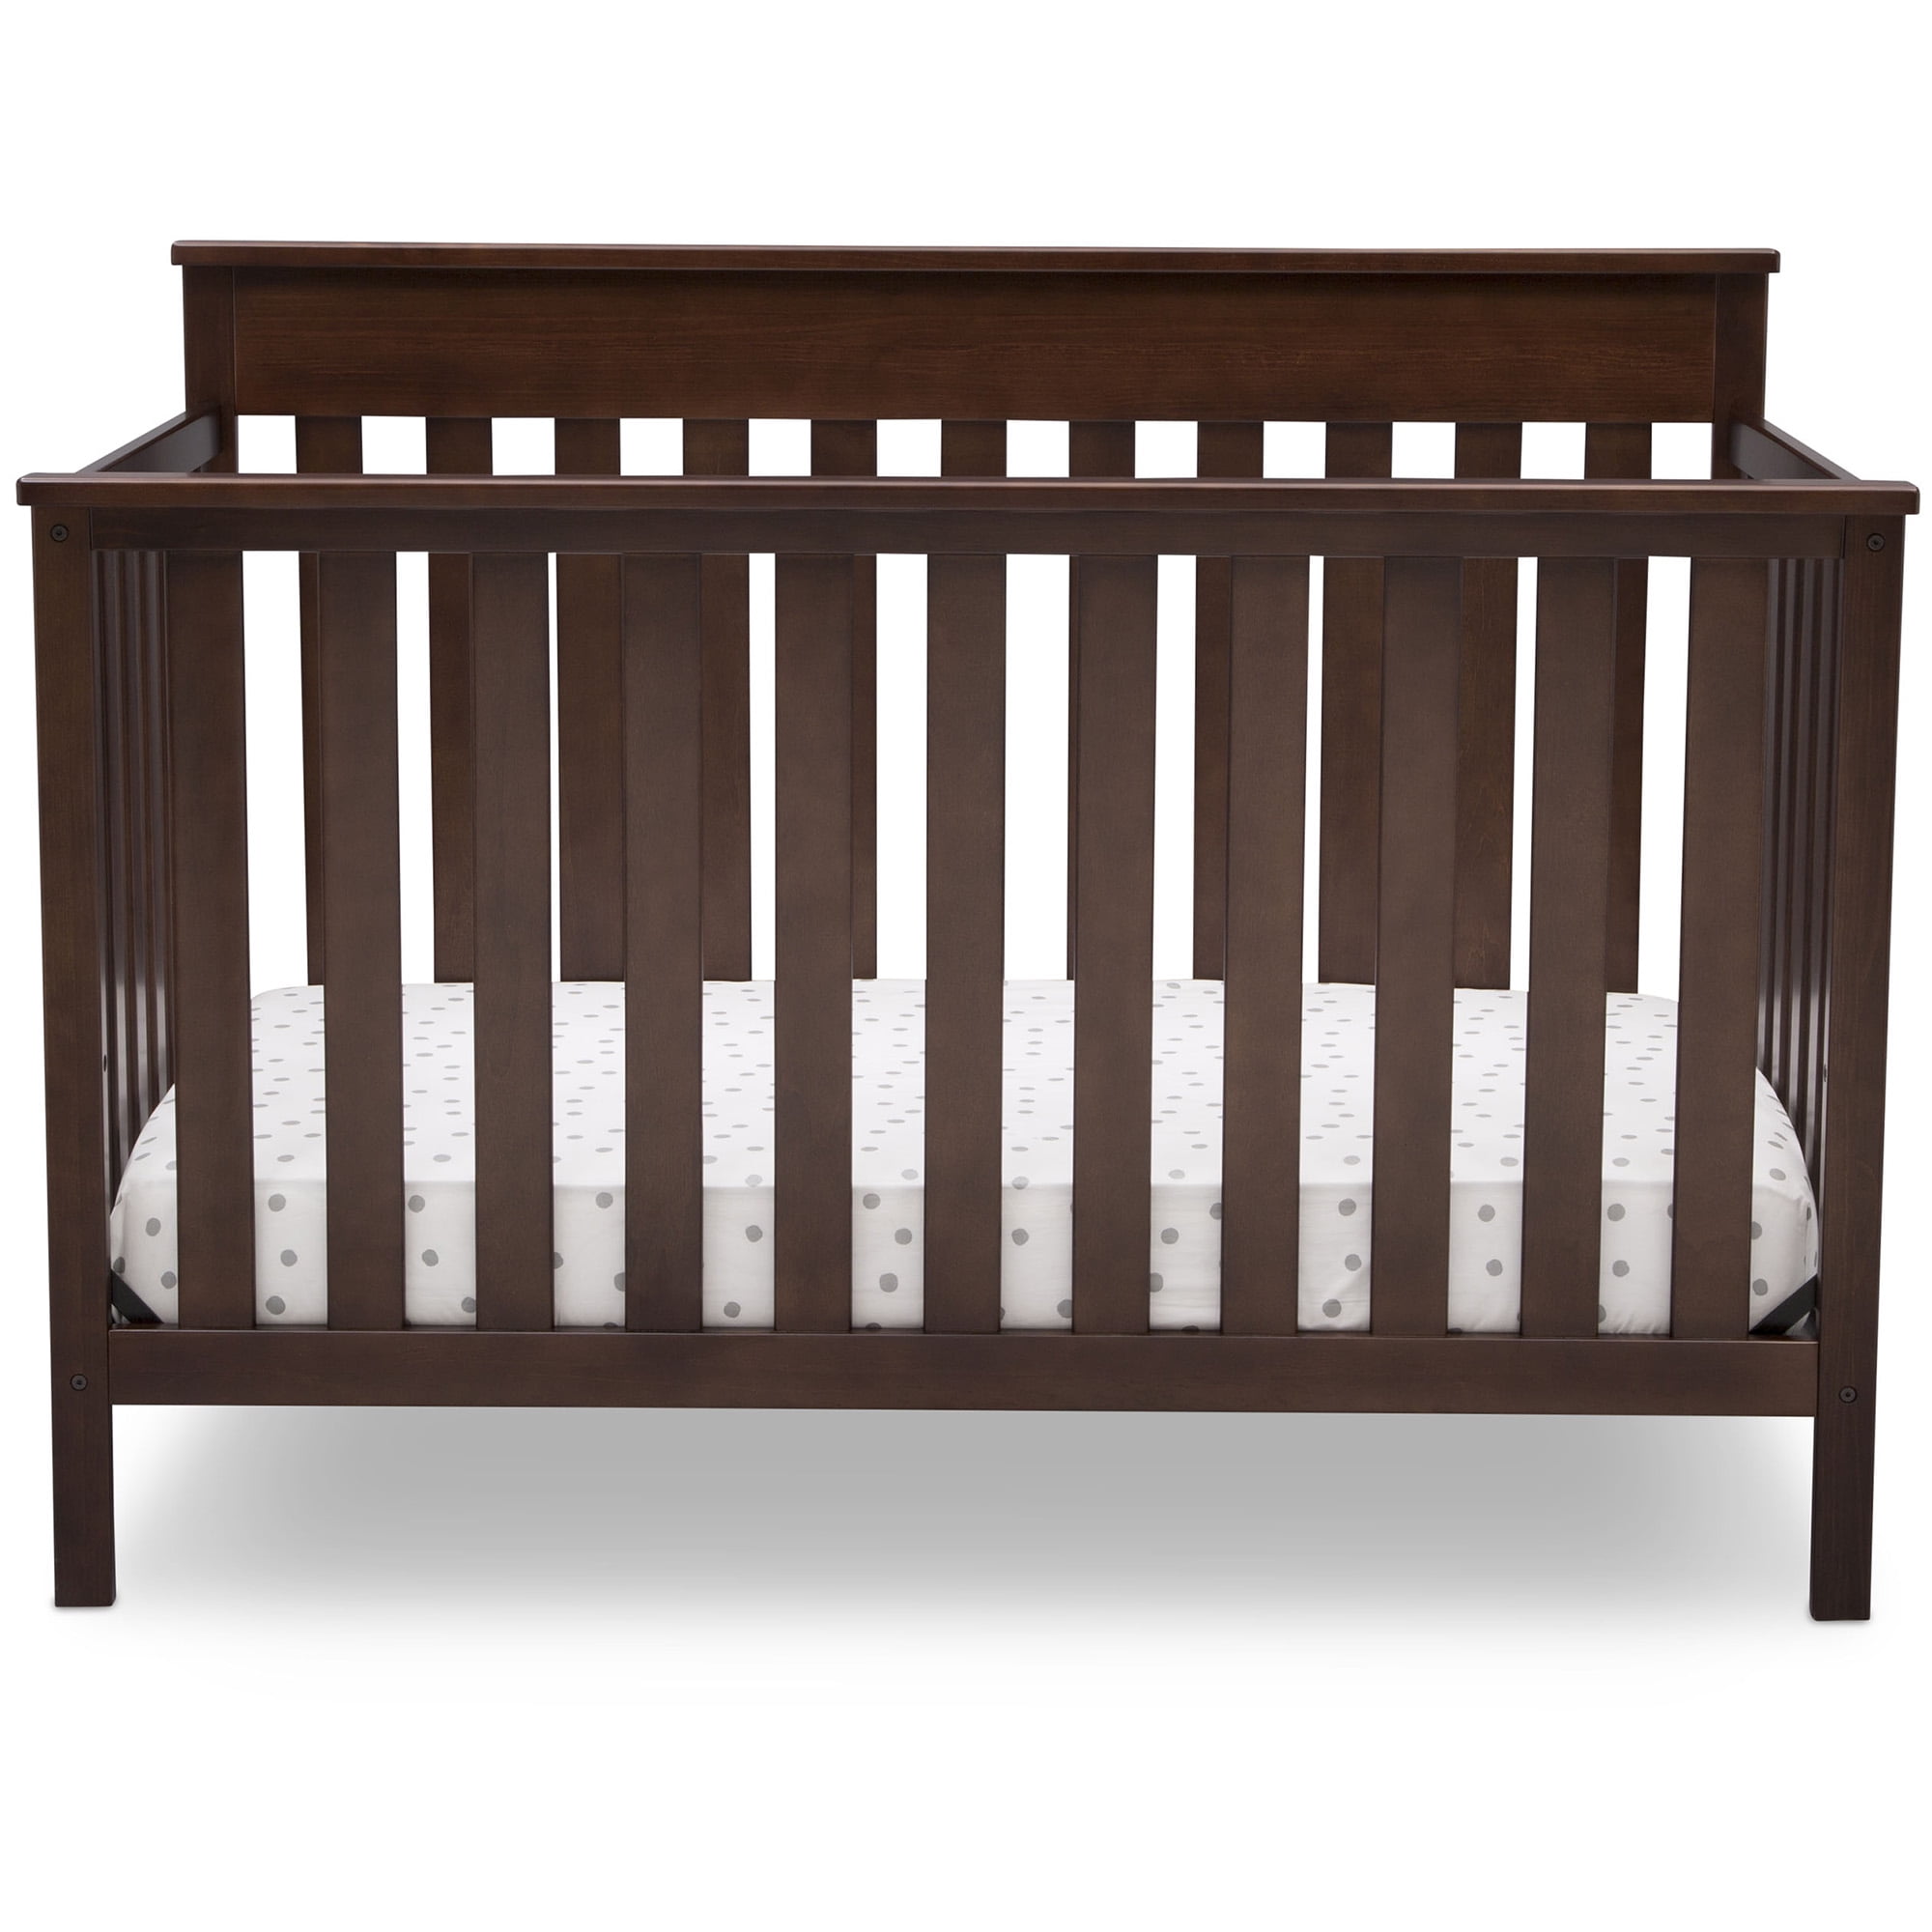 Delta Children Kingswood 4 In 1 Convertible Baby Crib Walnut Espresso Walmart Com Walmart Com